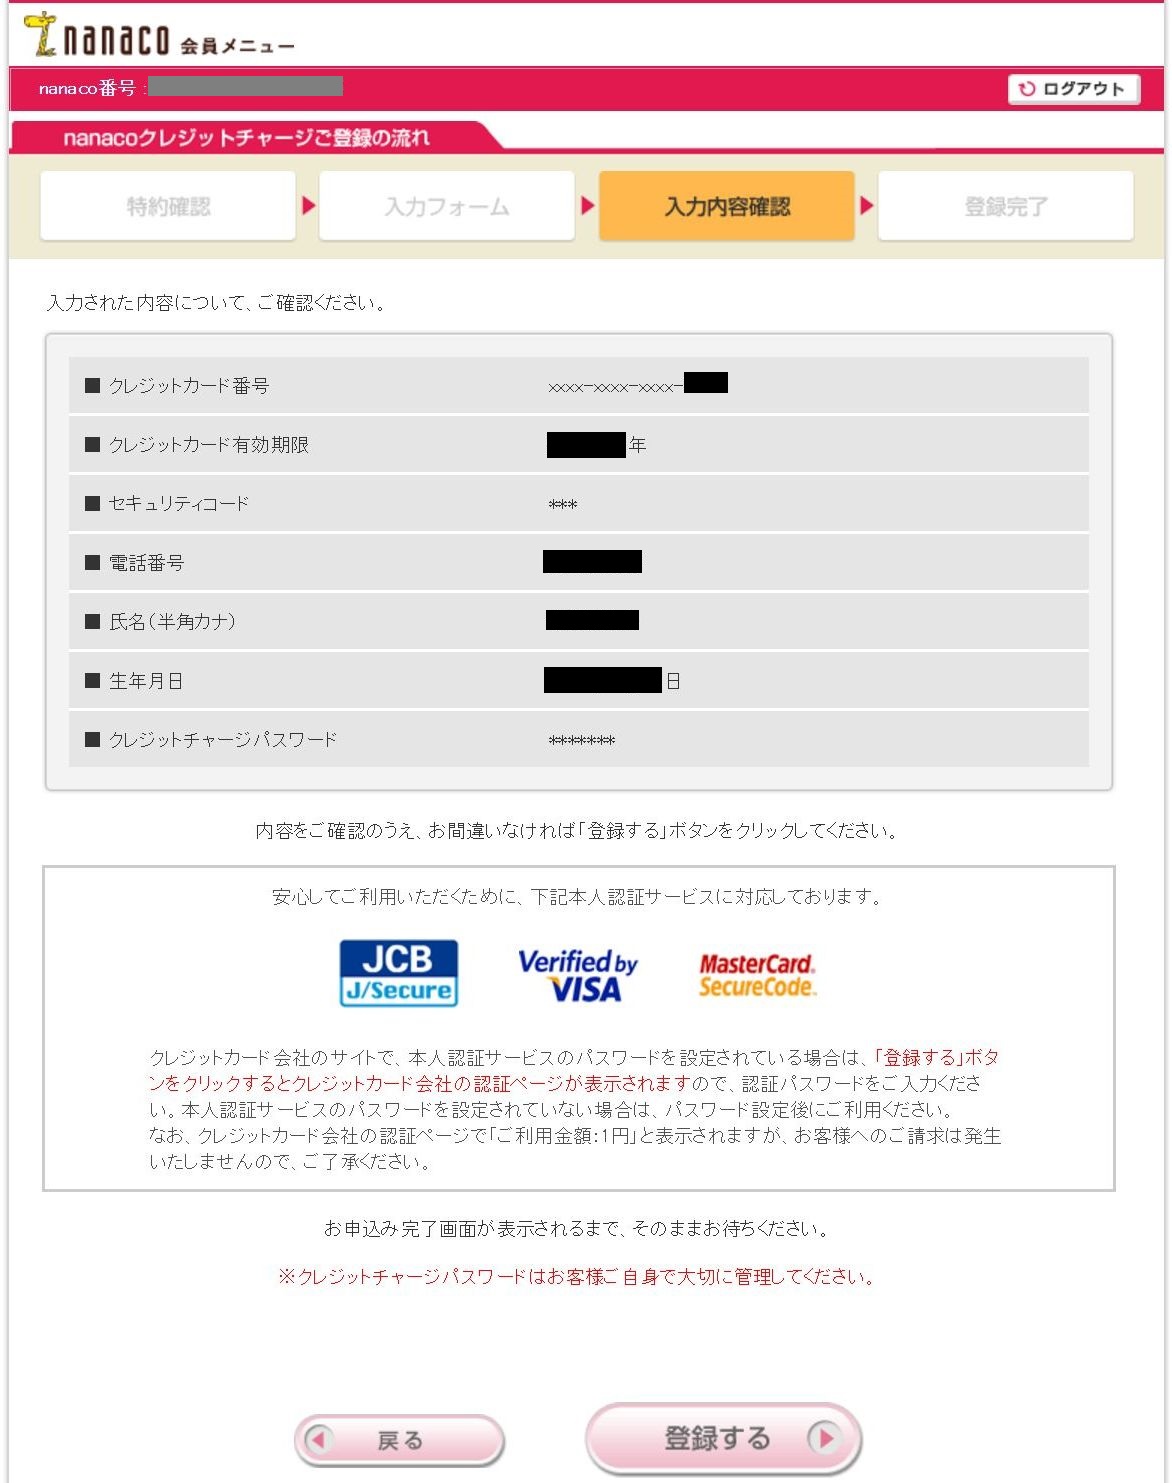 nanacoクレジットチャージ登録の入力内容確認画面